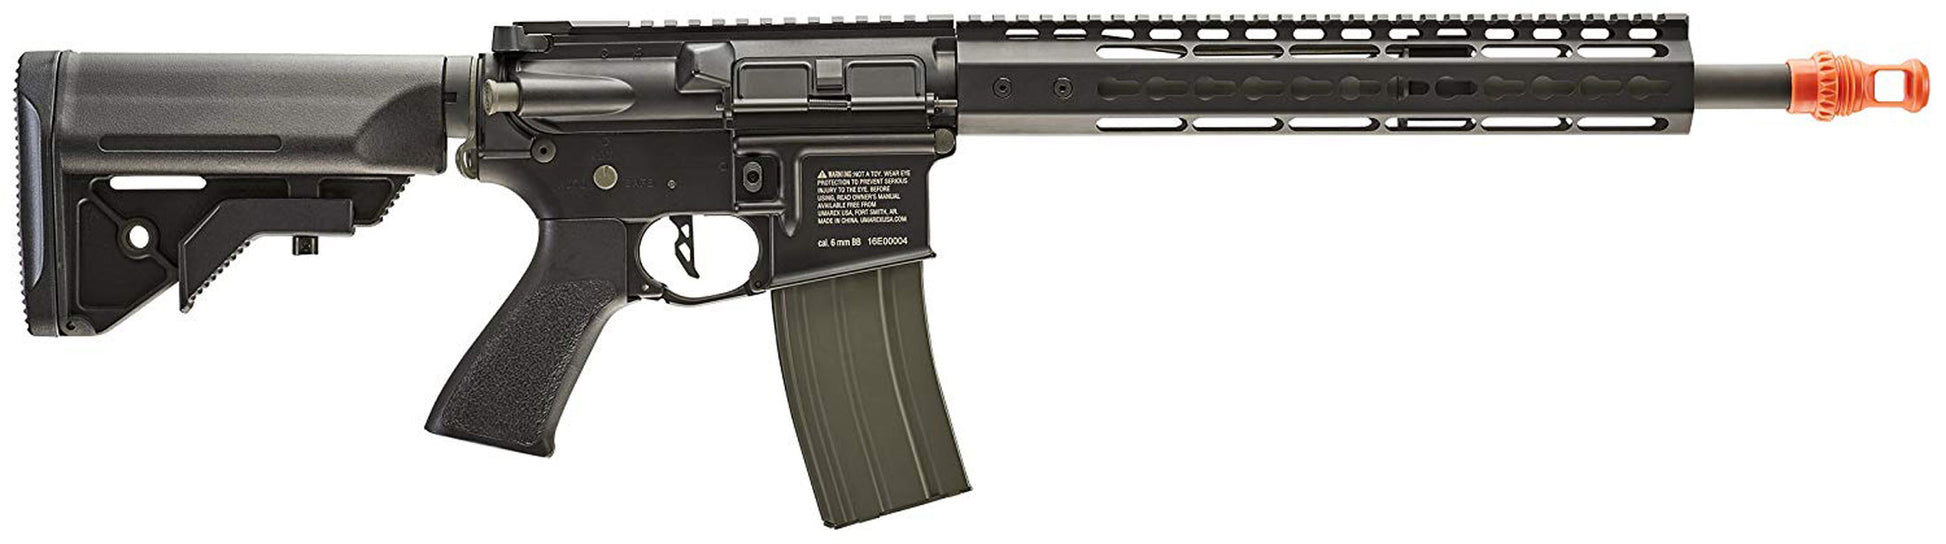 Elite Force M4 MCR Airsoft Rifle AEG - Black - Elite Force